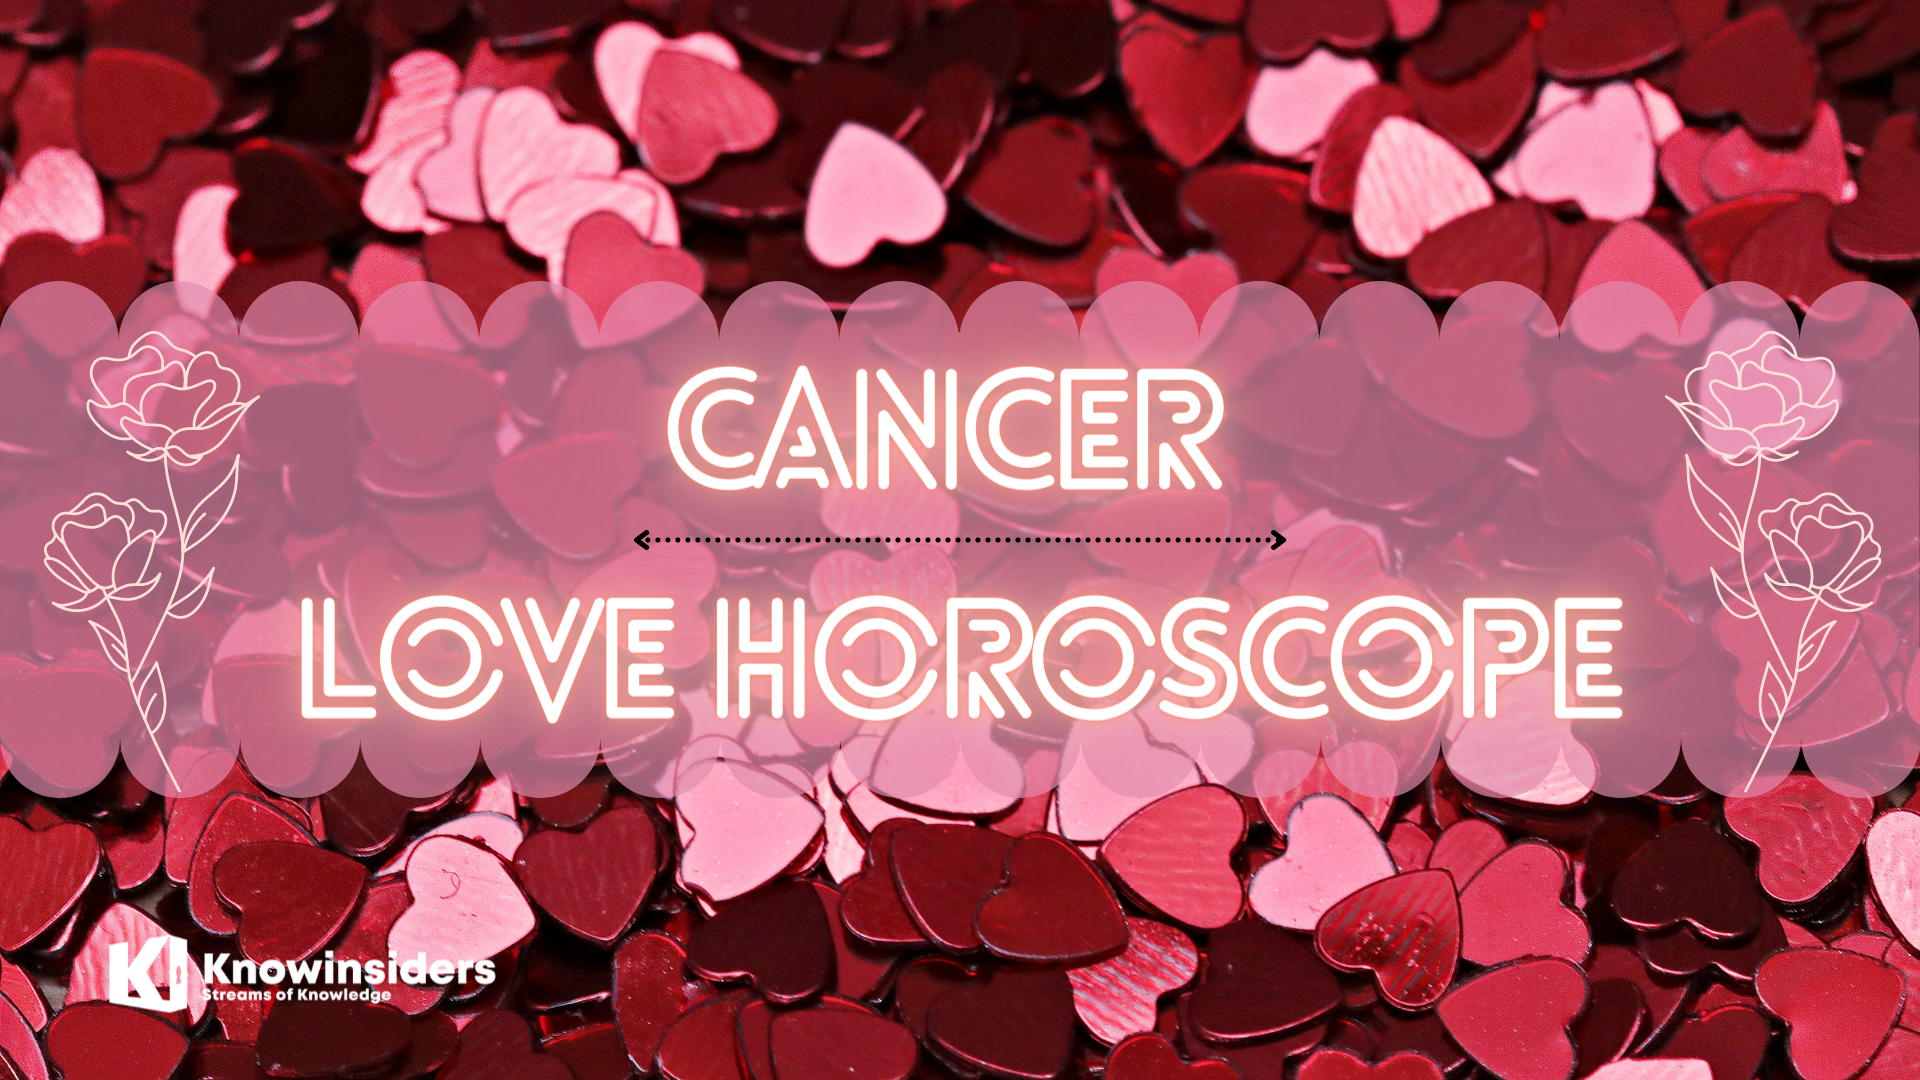 Cancer Love Horoscope. Photo: Knowinsiders.